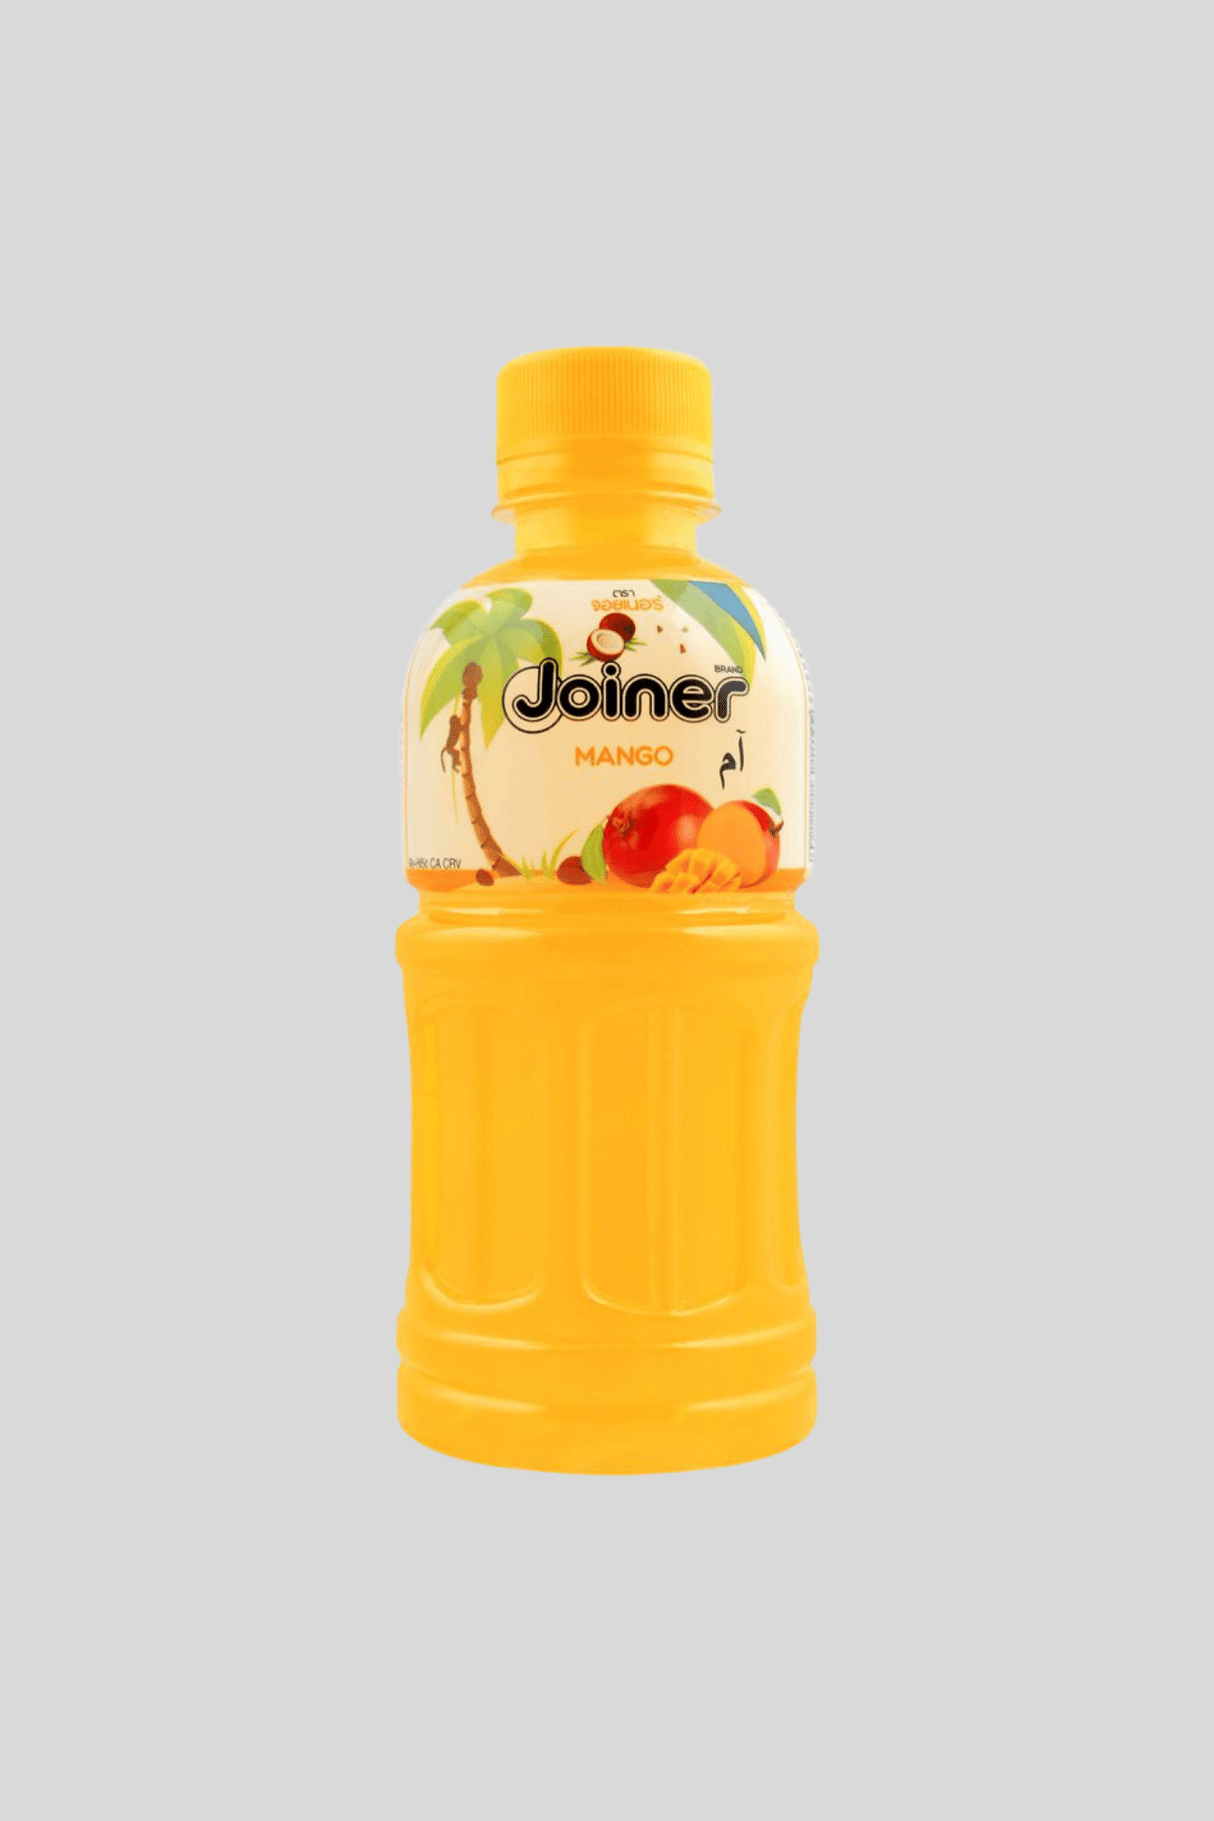 joiner juice mango 320ml